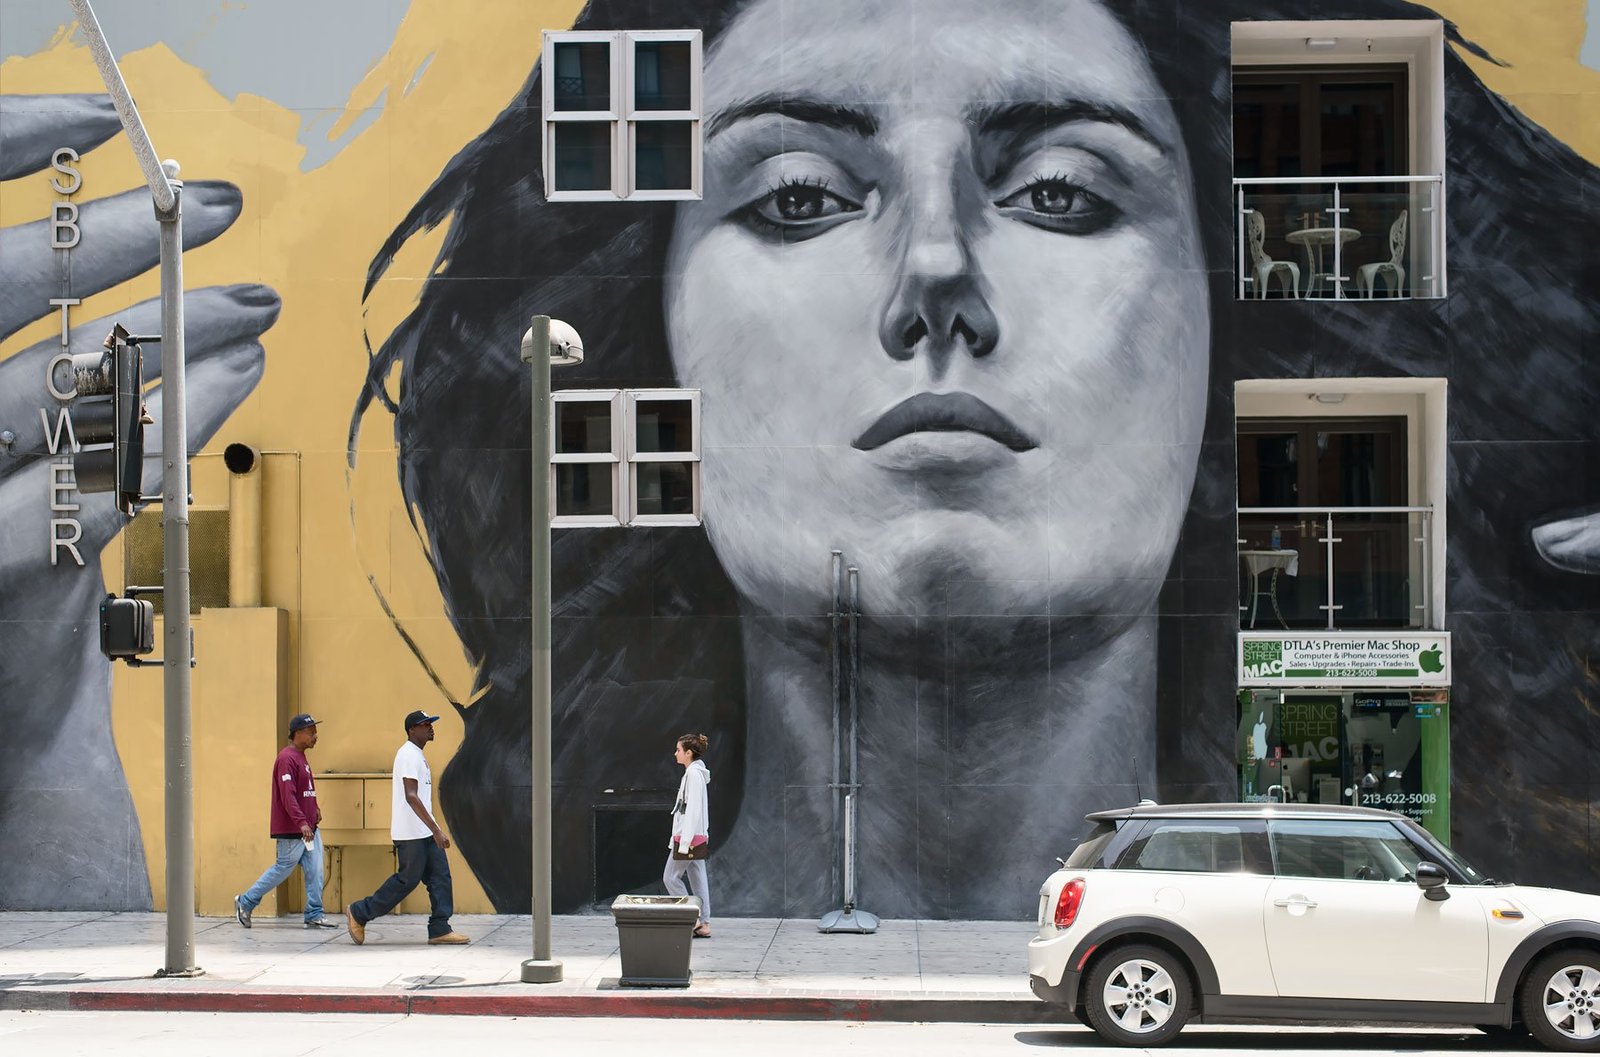 My 10 Favorite Things to do in LA | Street Art in Downtown Los Angeles